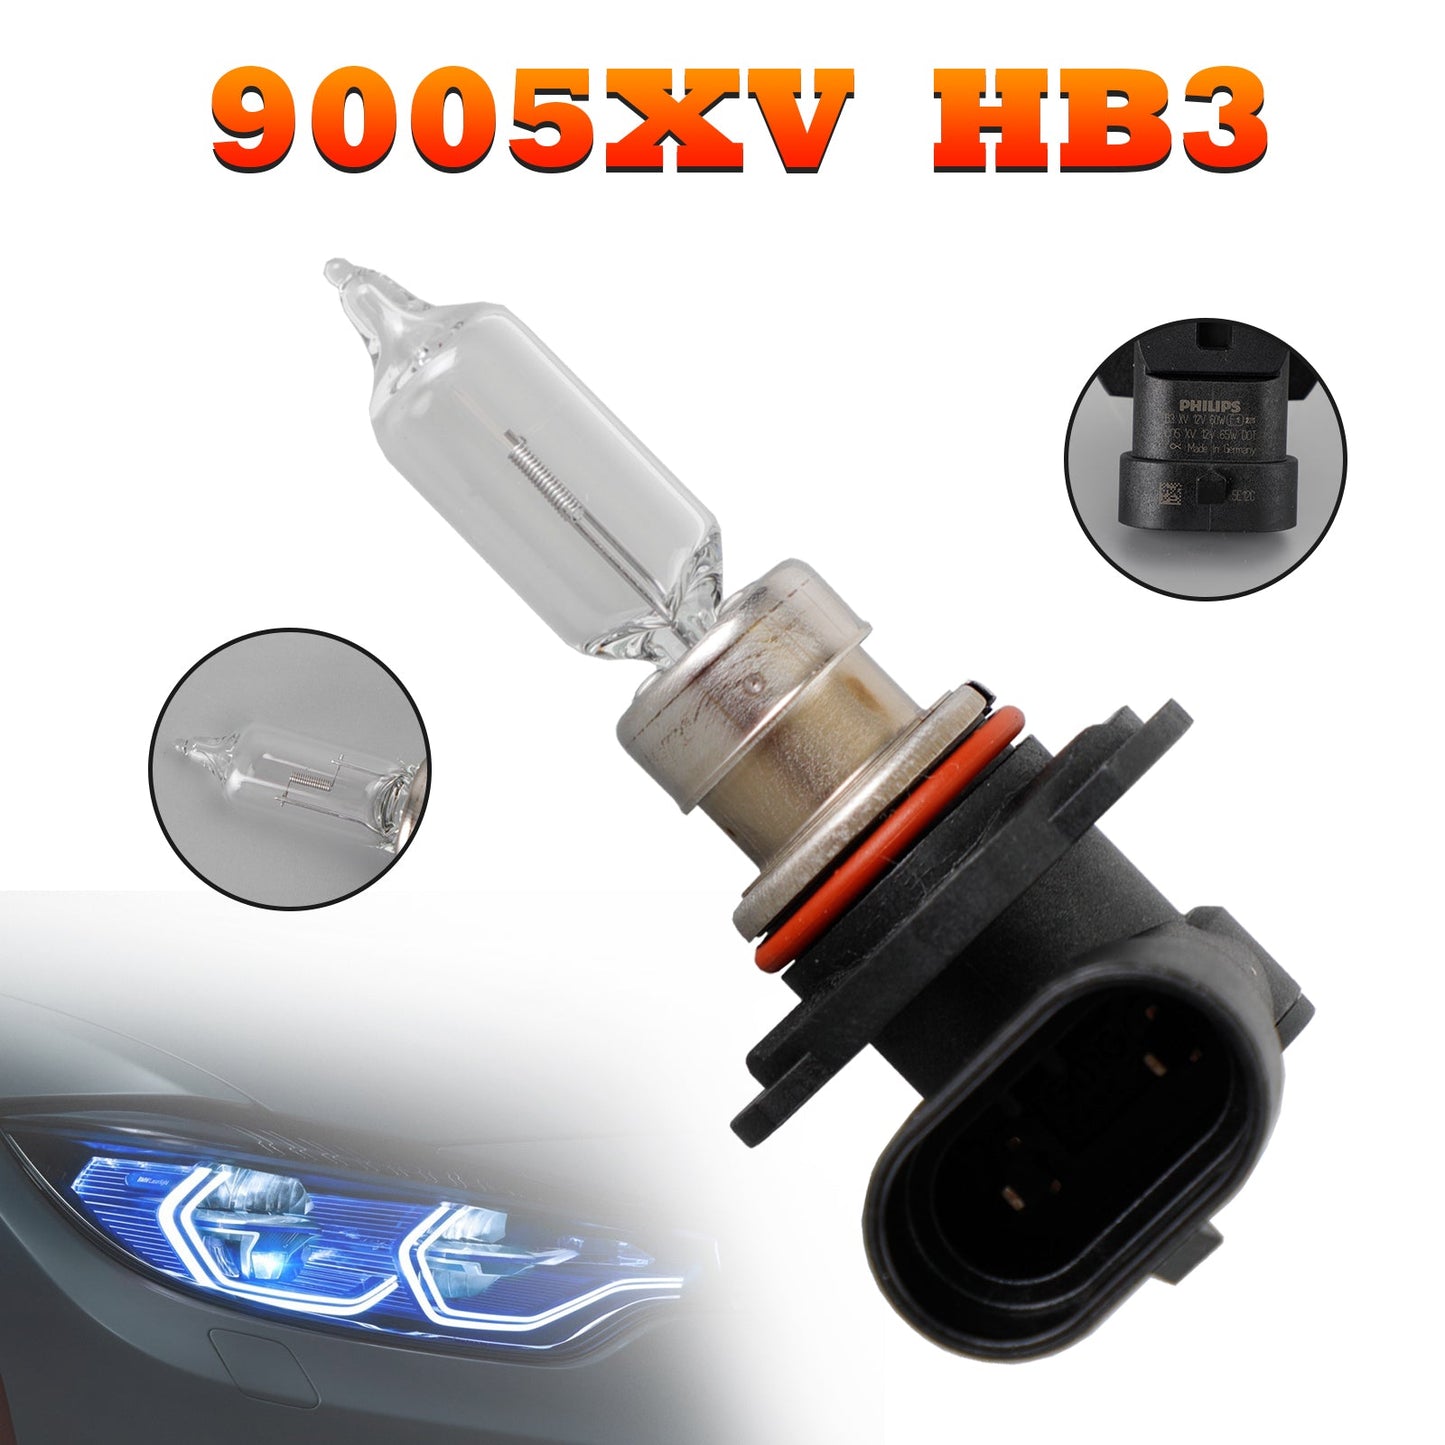 For Philips 9005XV X-tremeVision Headlight HB3 12V60W +100% +35M